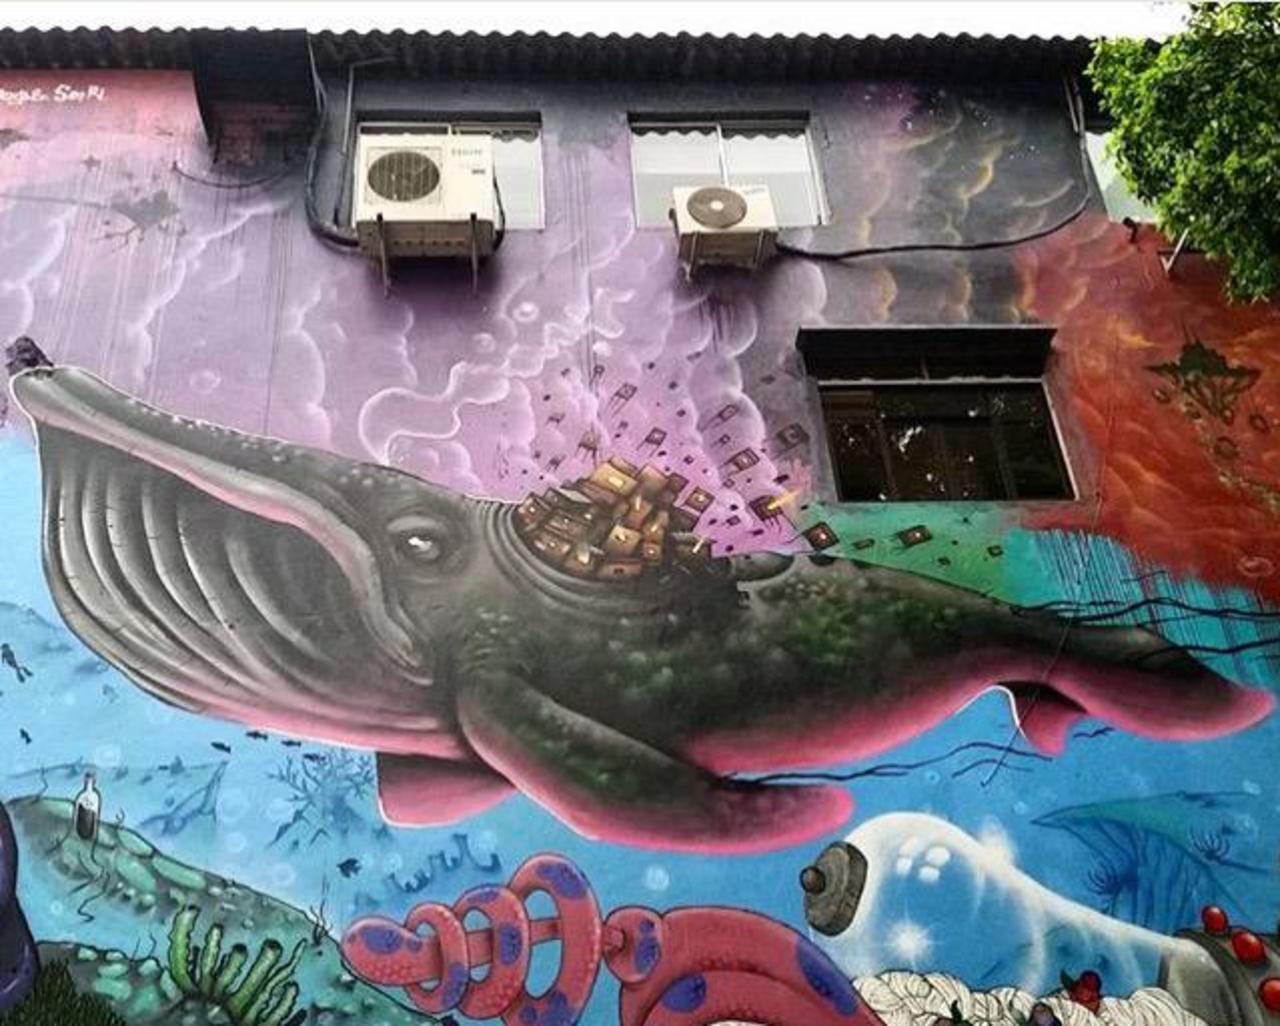 RT belilac "Street Art by joks_johnes Pinheiros, São Paulo 

#art #mural #graffiti #streetart http://t.co/NQjinlBn3V"